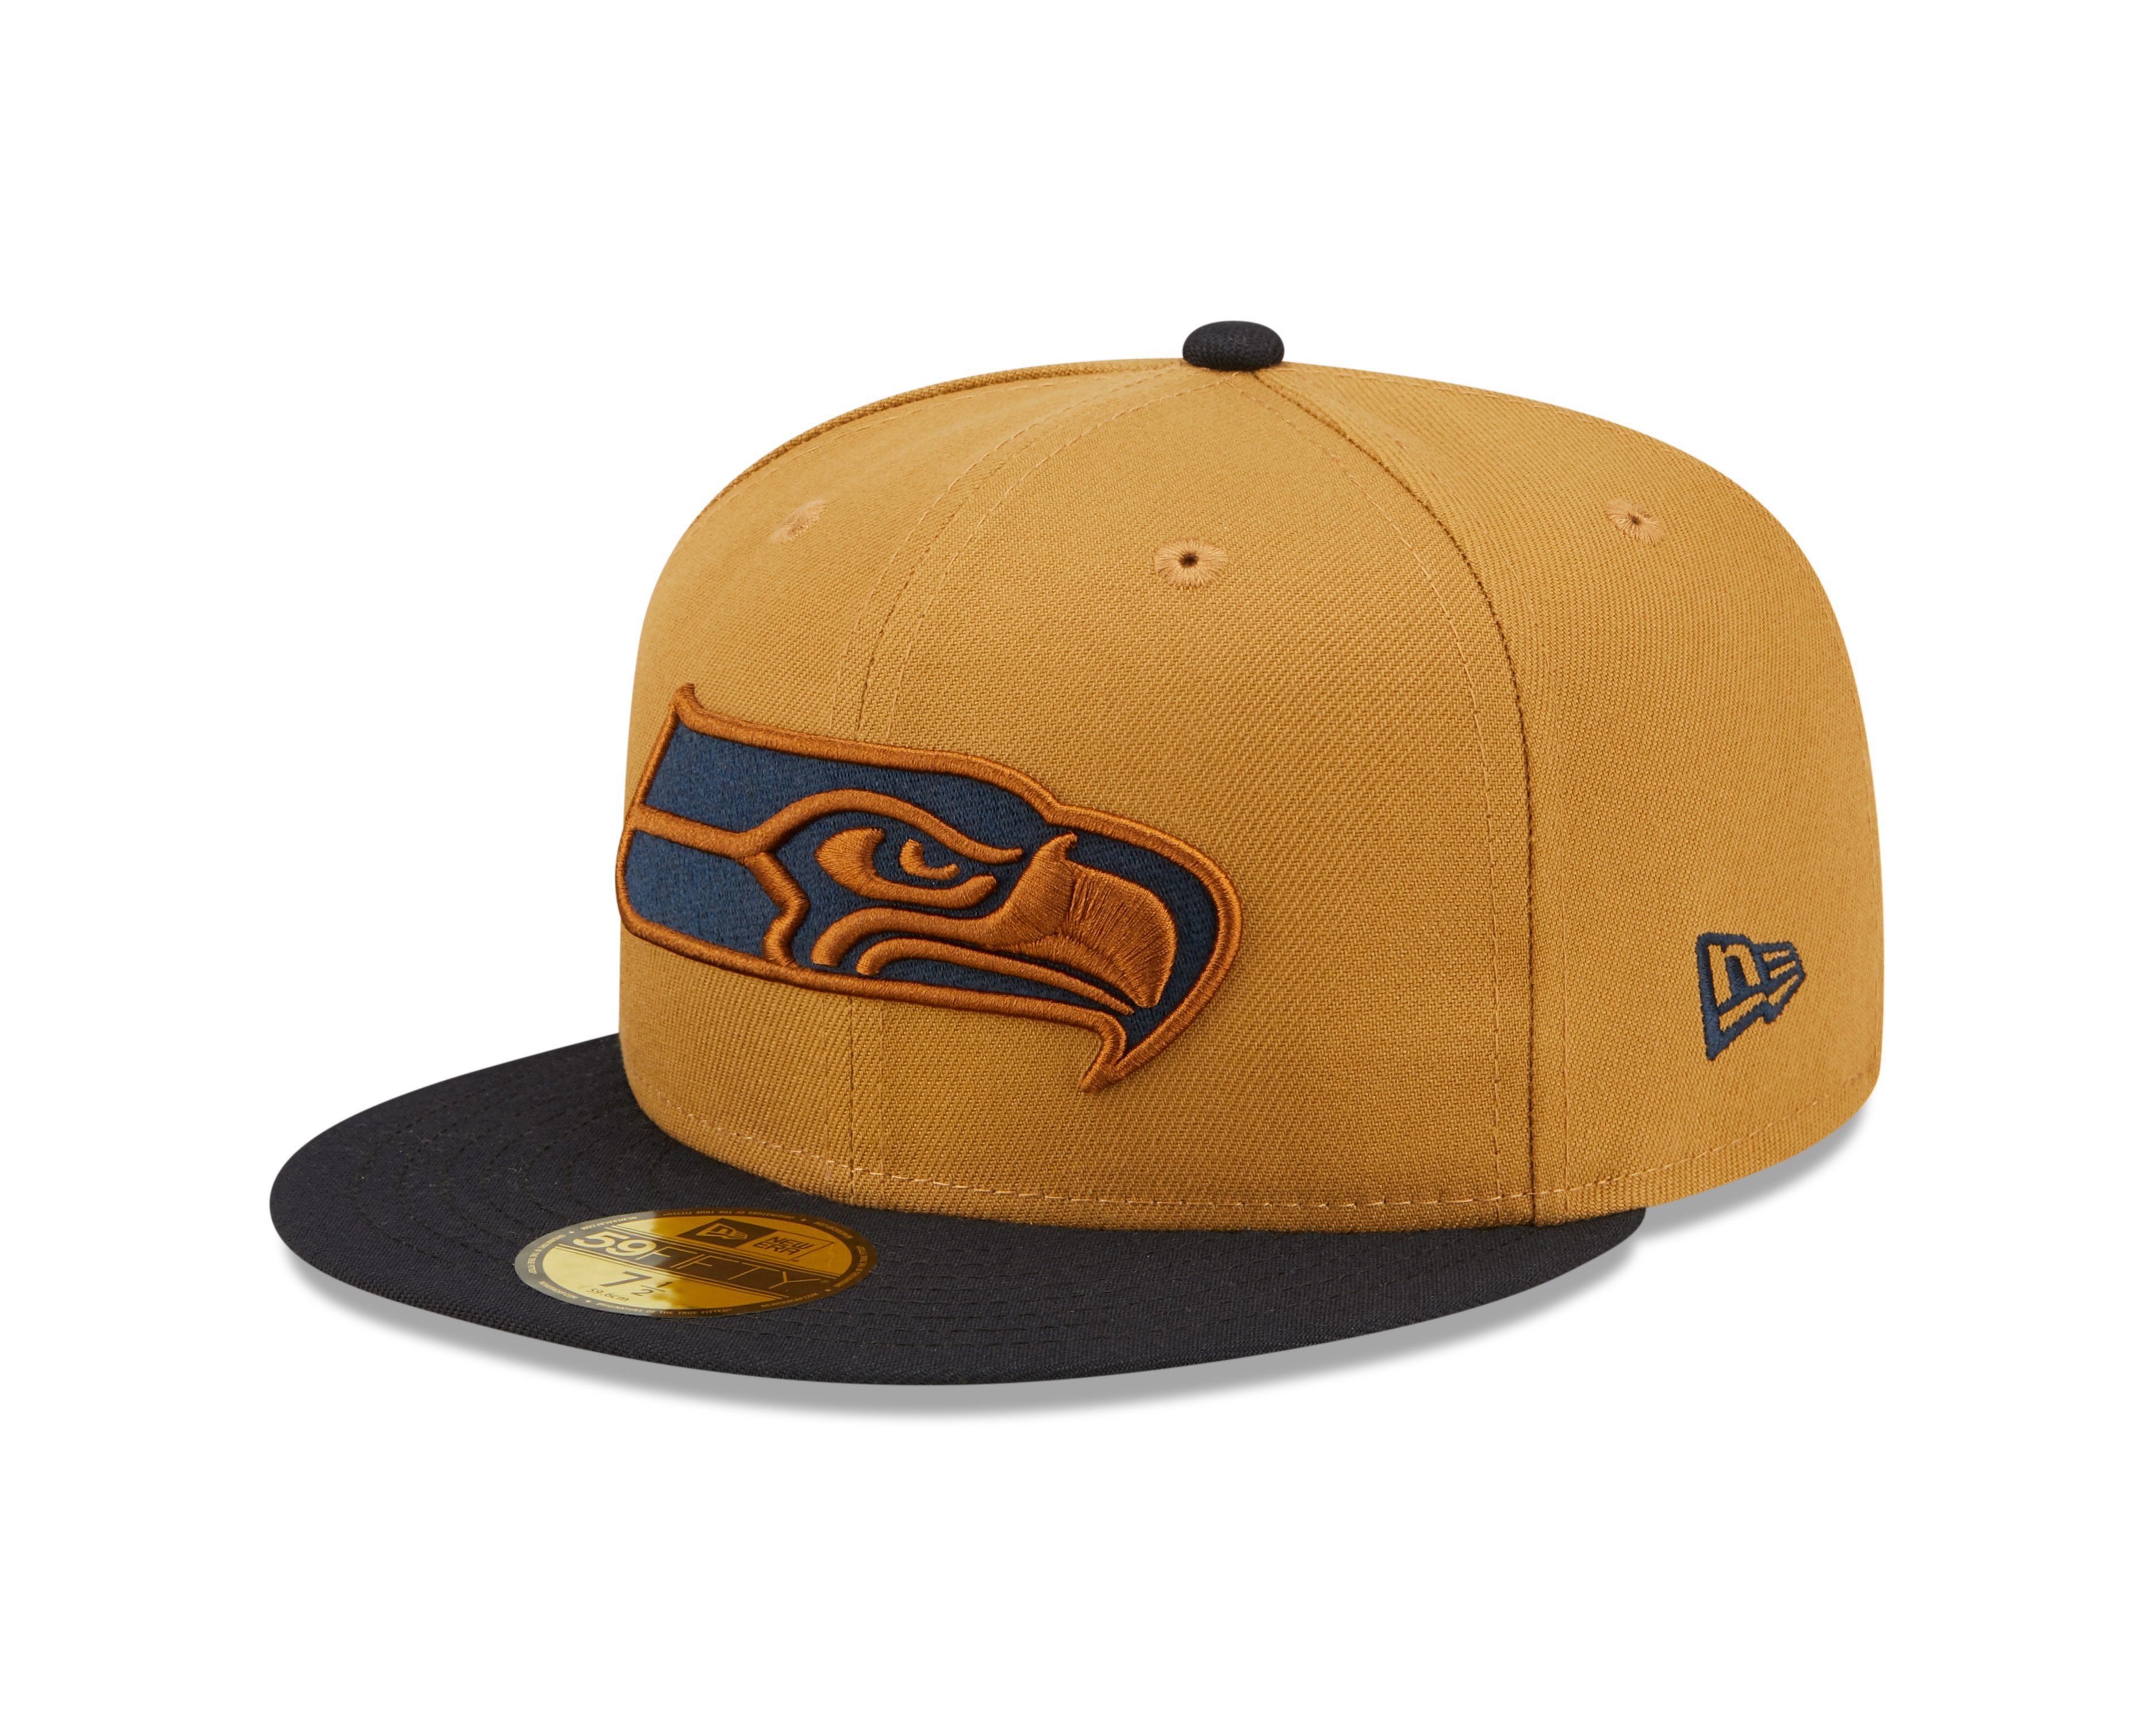 Wheat (1-St) New New Fifty 59 Seahawks Era Seattle Cap Cap Baseball Era